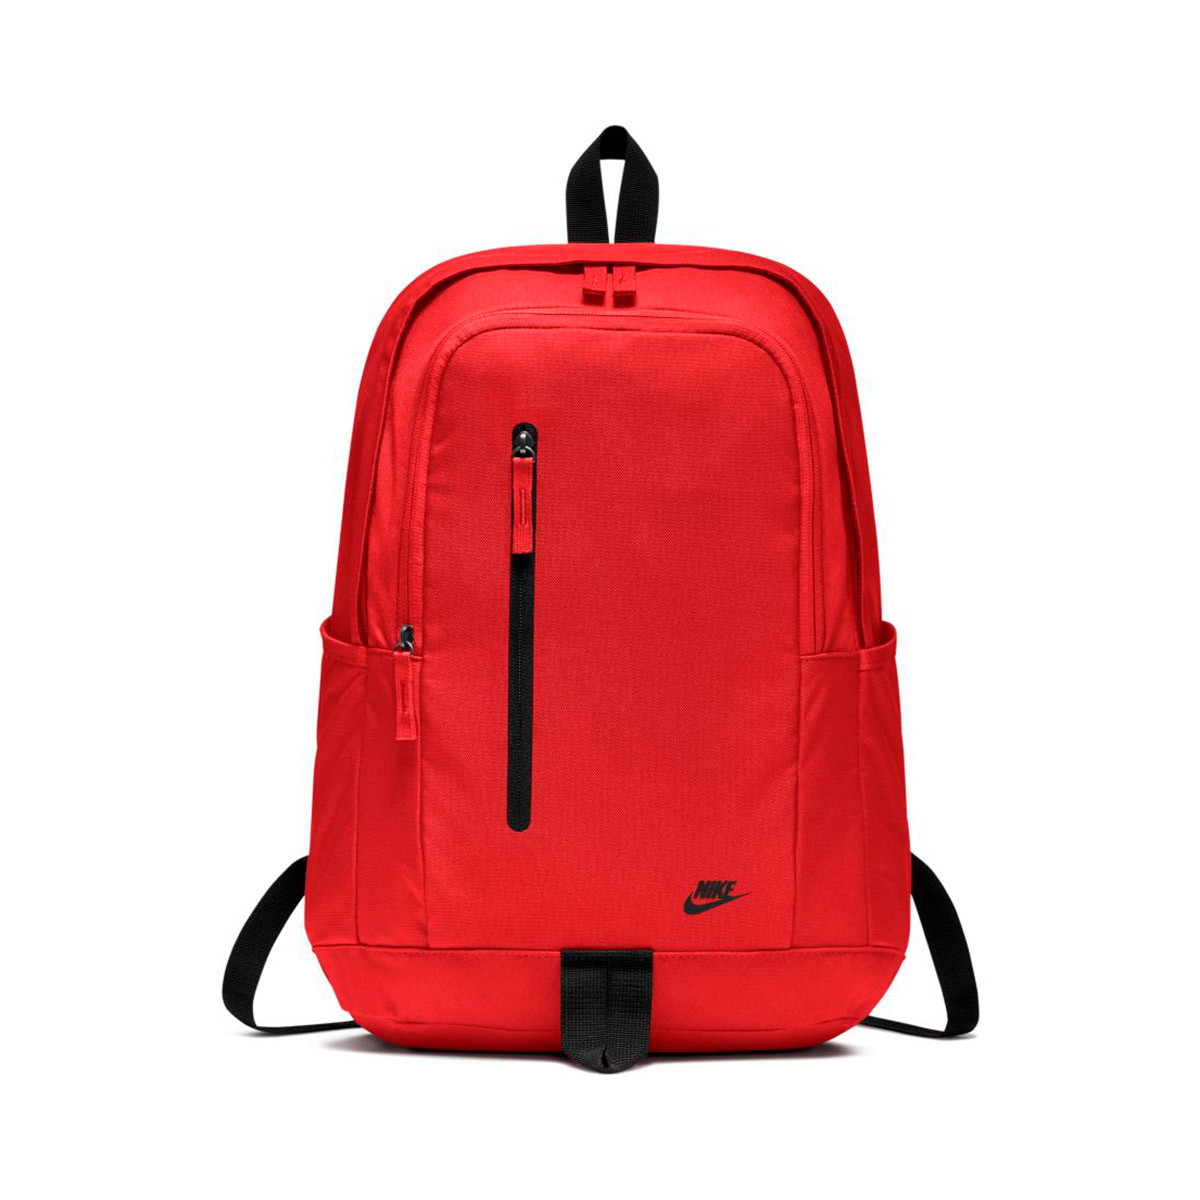 nike backpack black and red